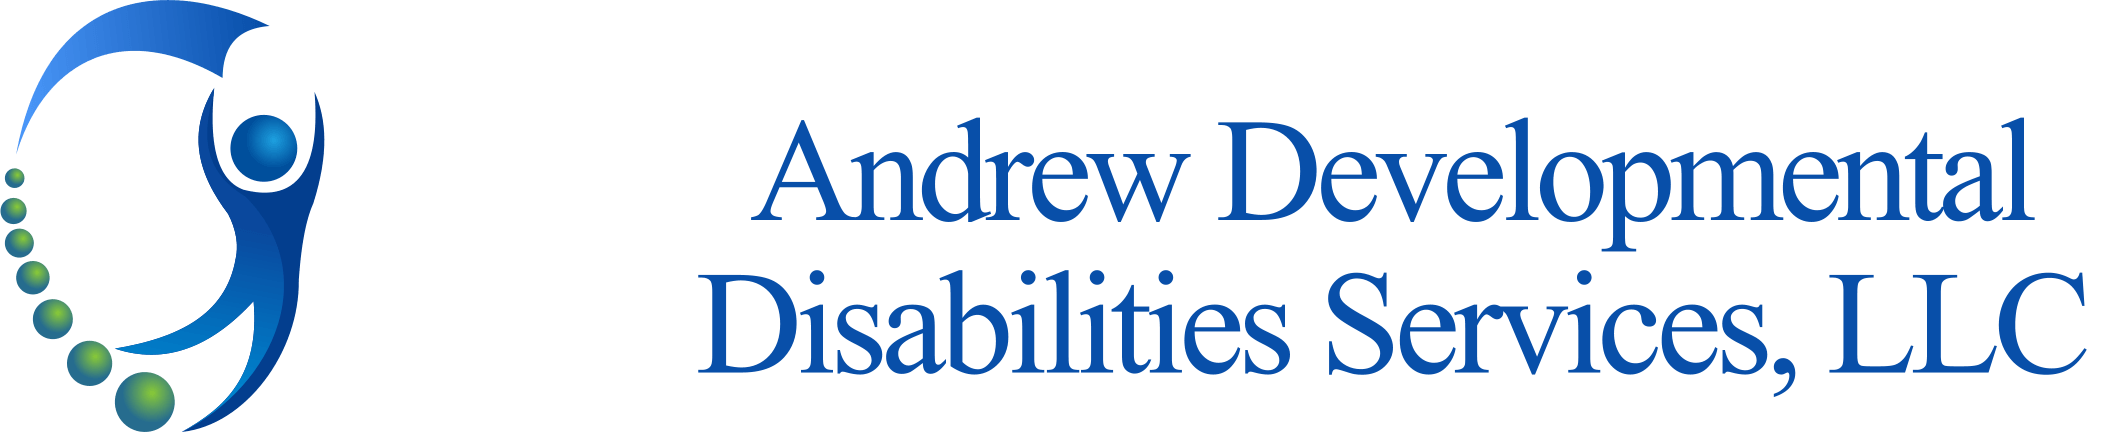 Andrew Developmental Disabilities Services, LLC